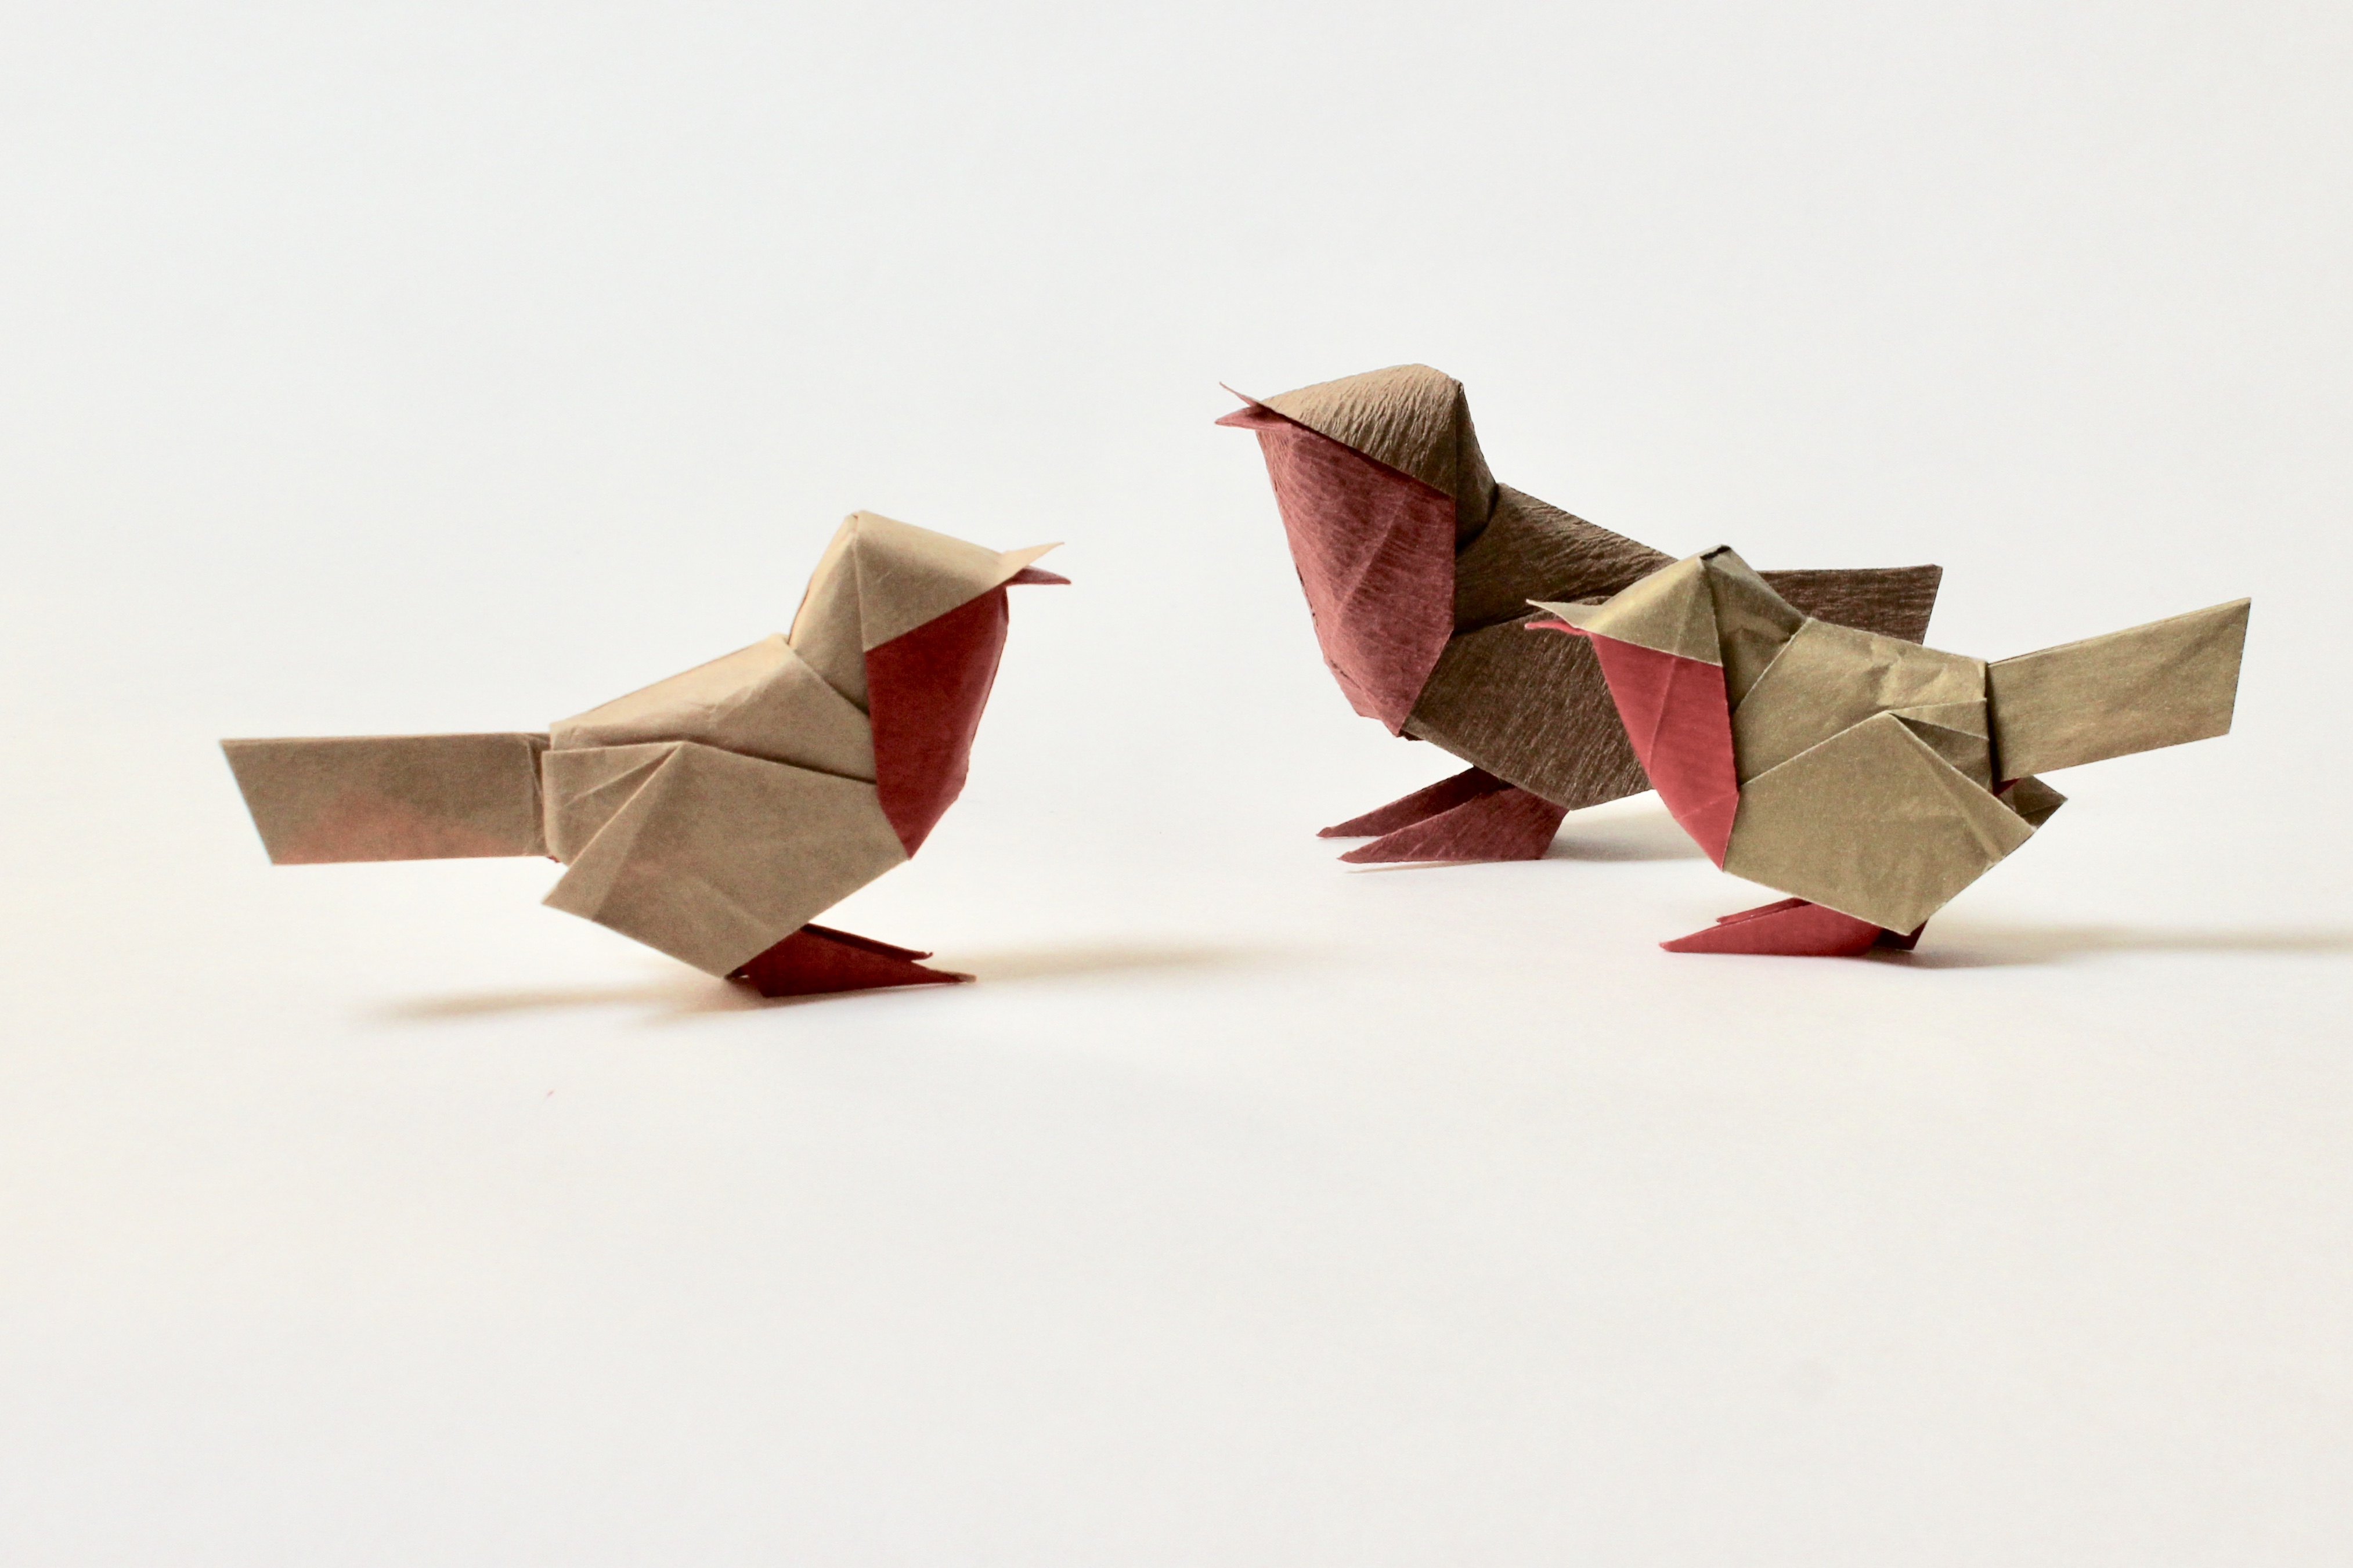 Origami Dog Instructions Advanced Diagrams David Brill